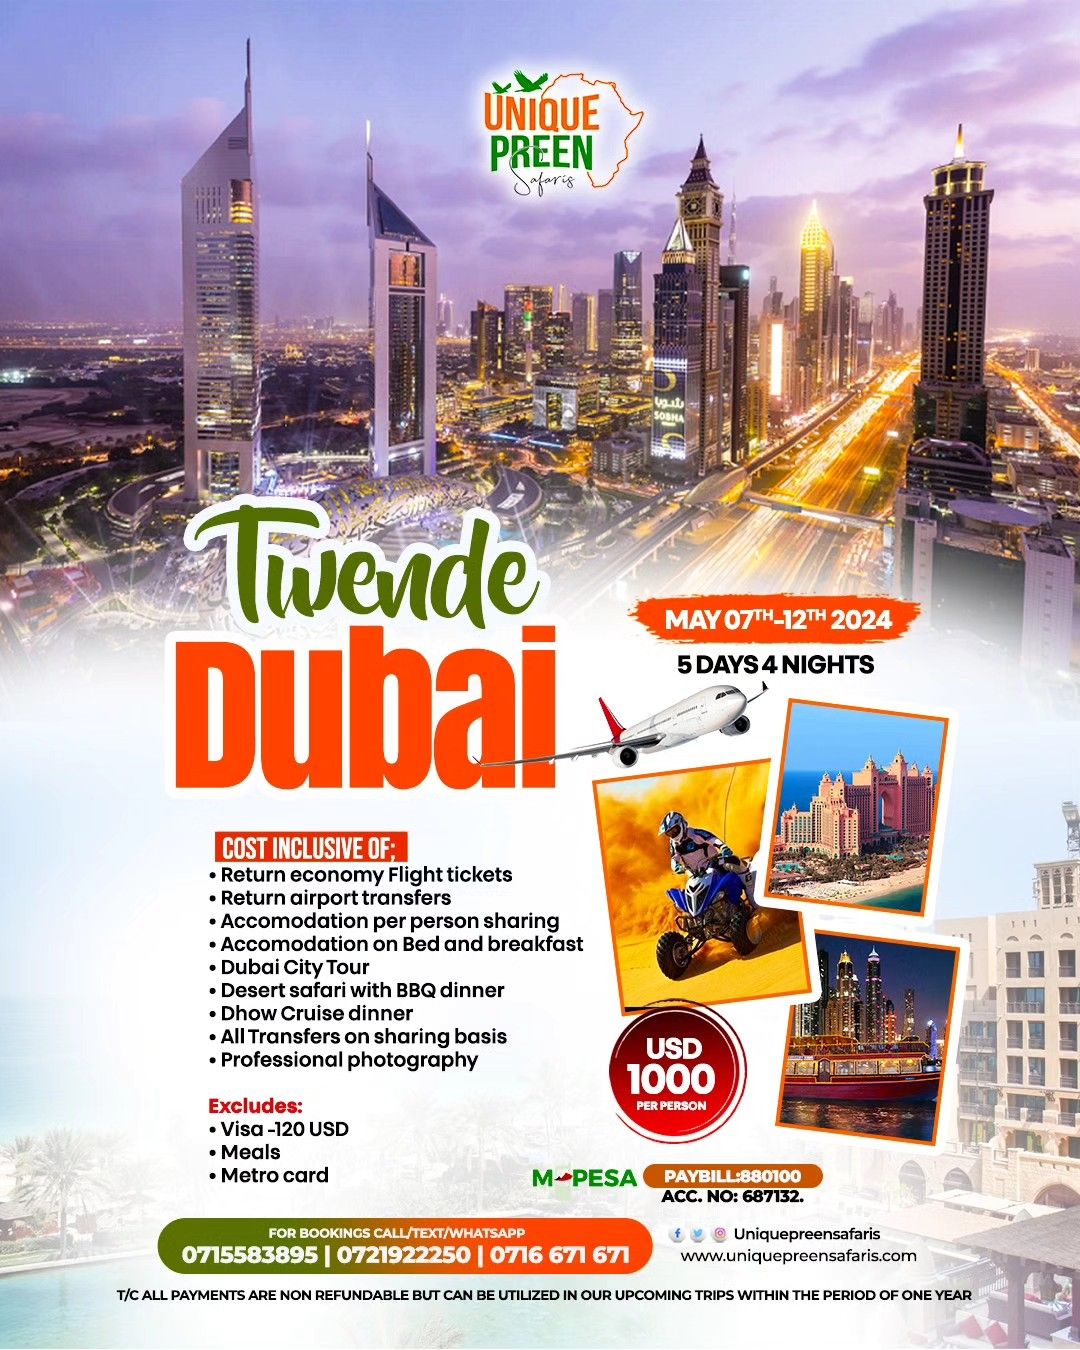 TWENDE DUBAI 7TH -12TH MAY@ $1,000\/= 5 DAYS 4 NIGHTS